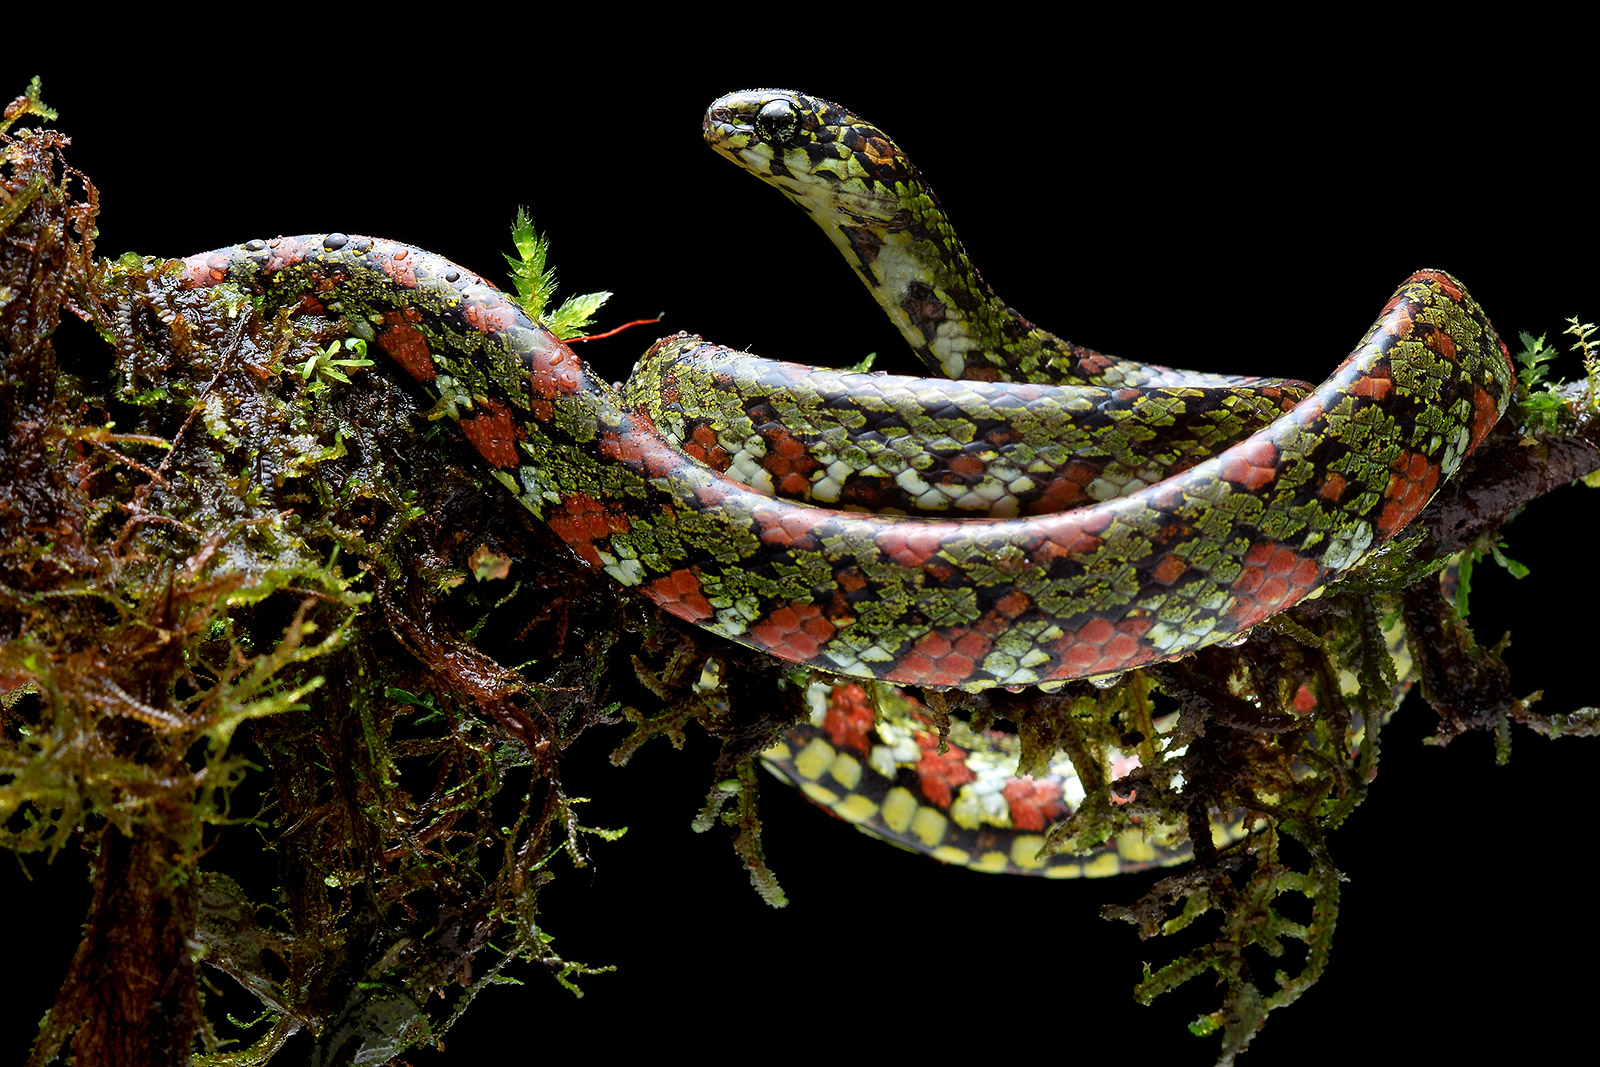 Image showing an individual of the snail-eating snake Sibon ayerbeorum